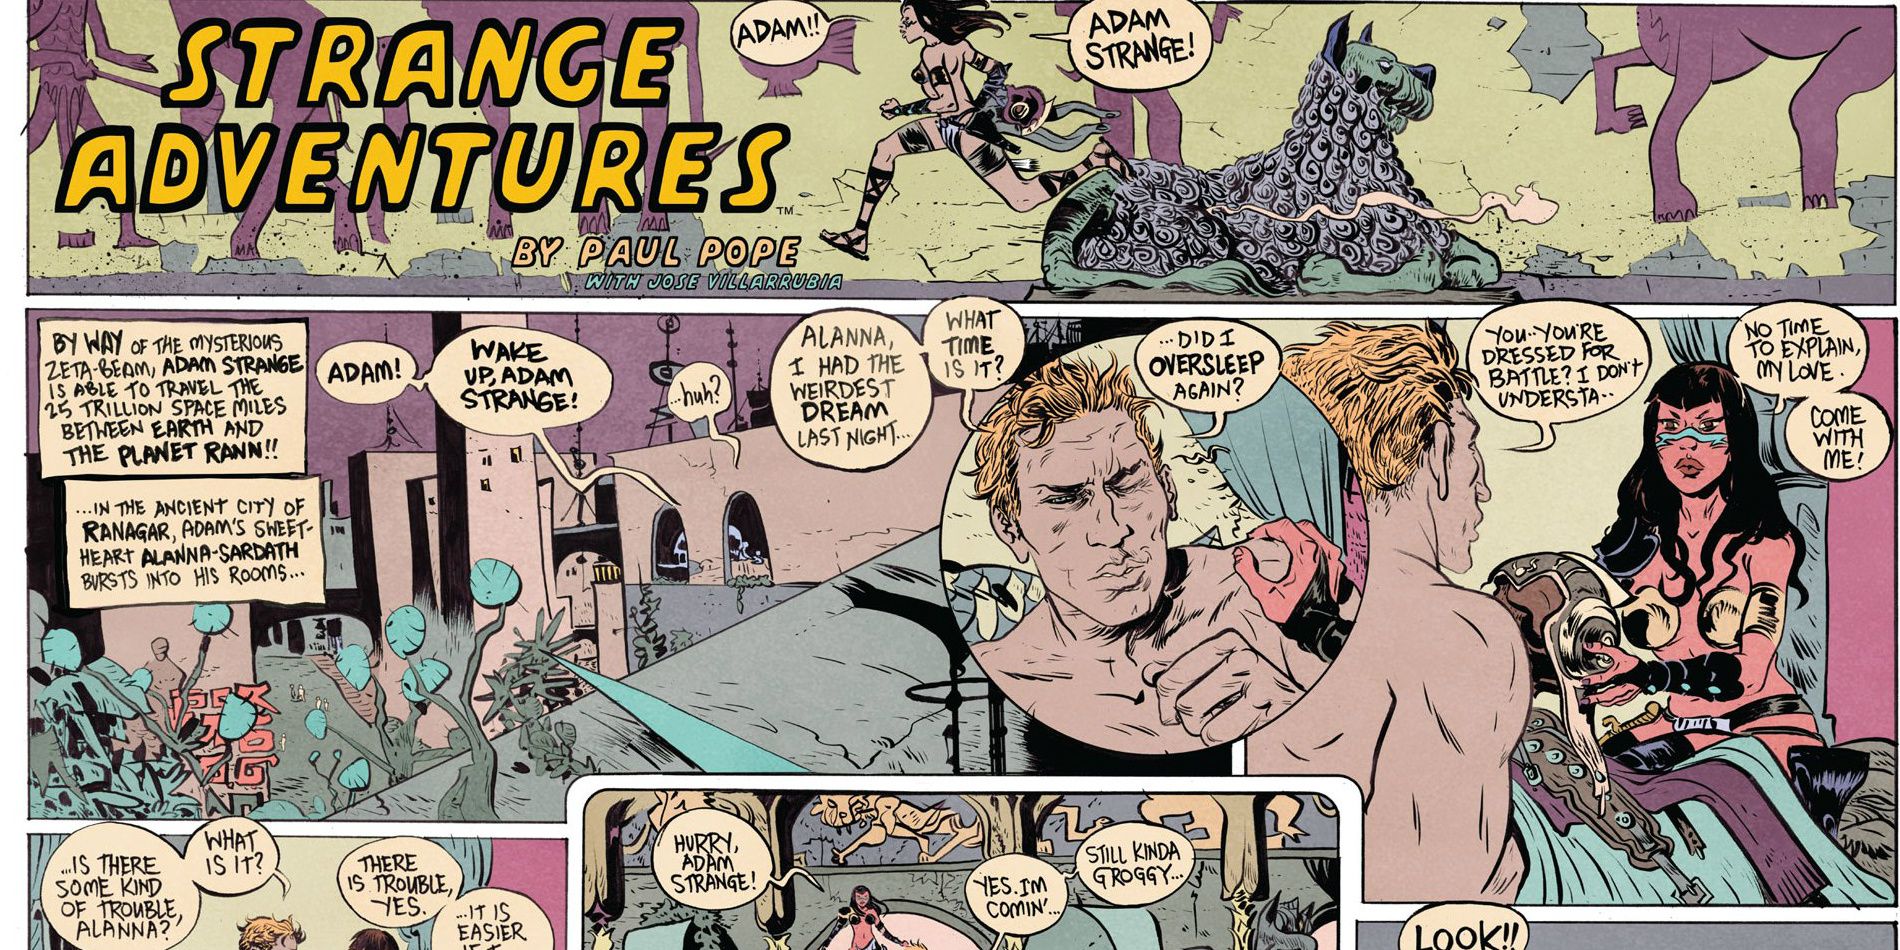 Strange Adventures in Wednesday Comics